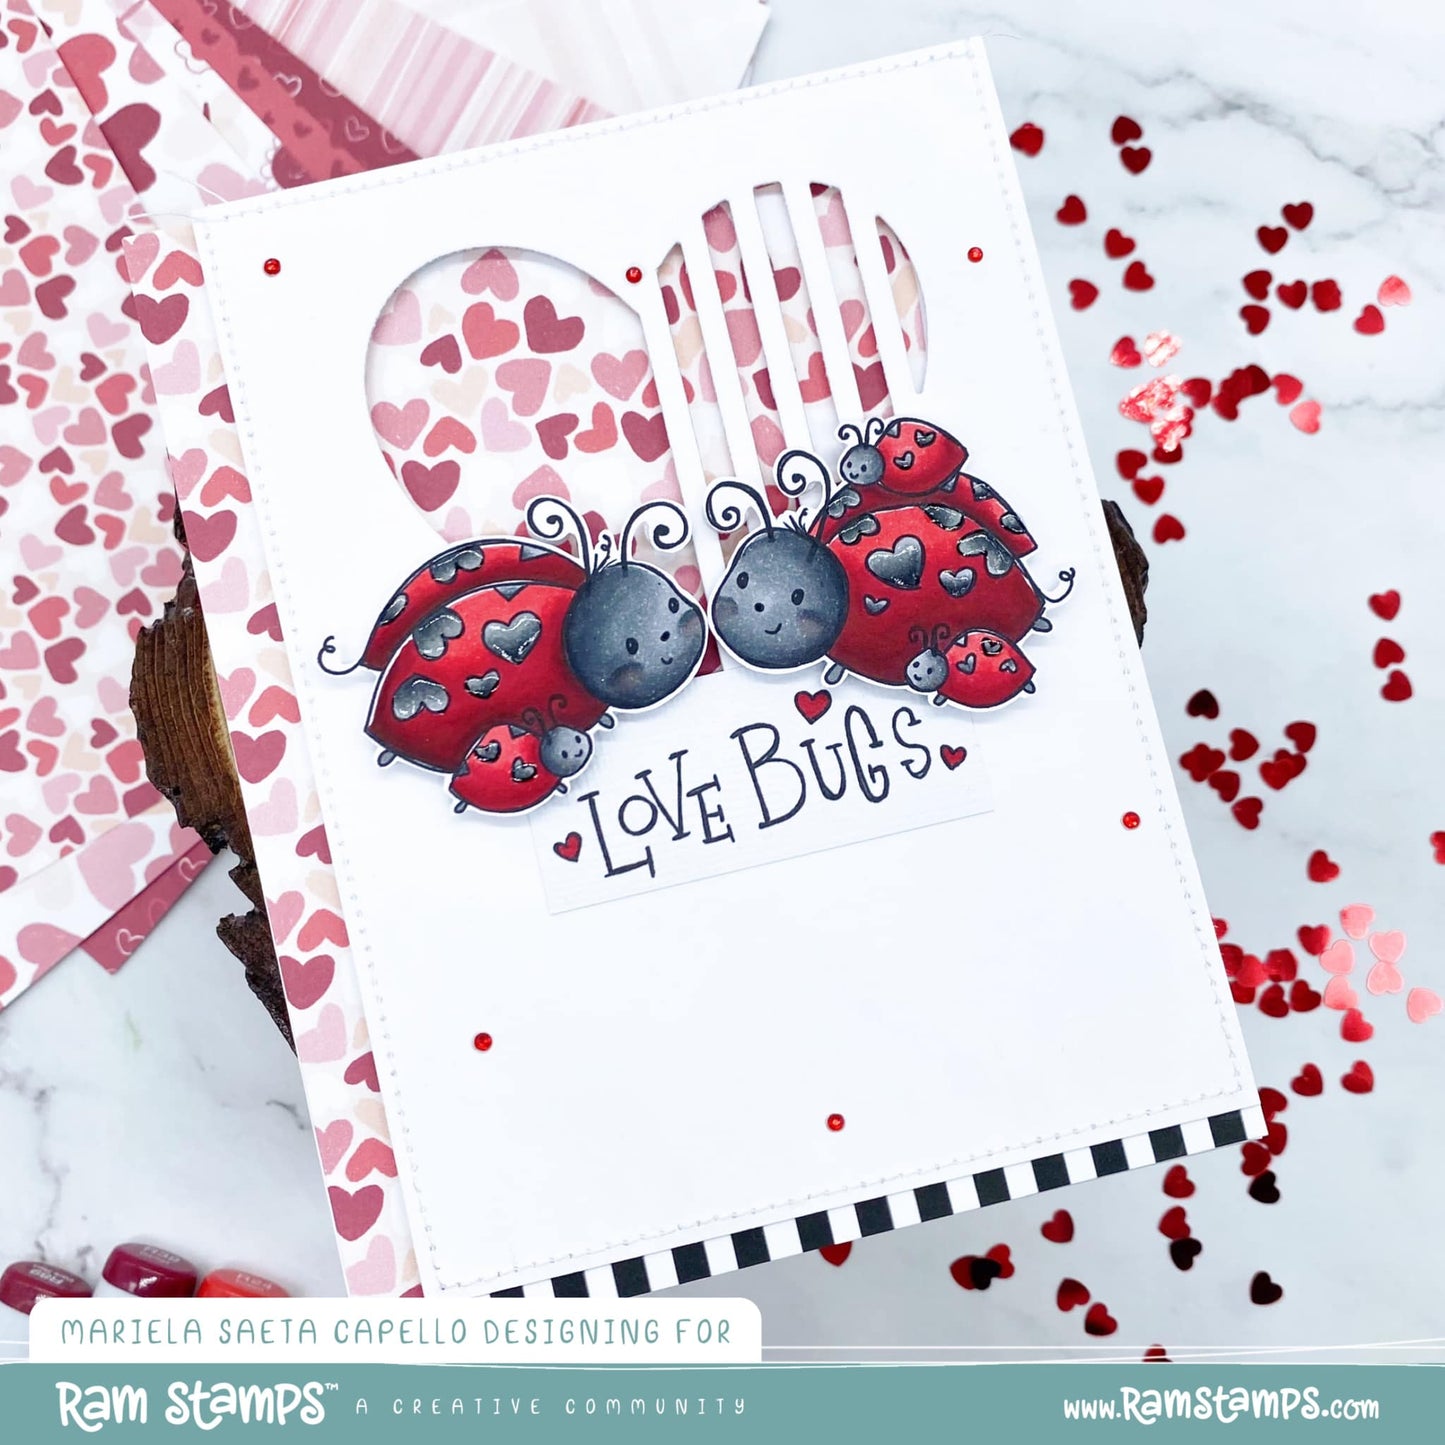 'Love Bugs' Digital Stamp & Paper Set